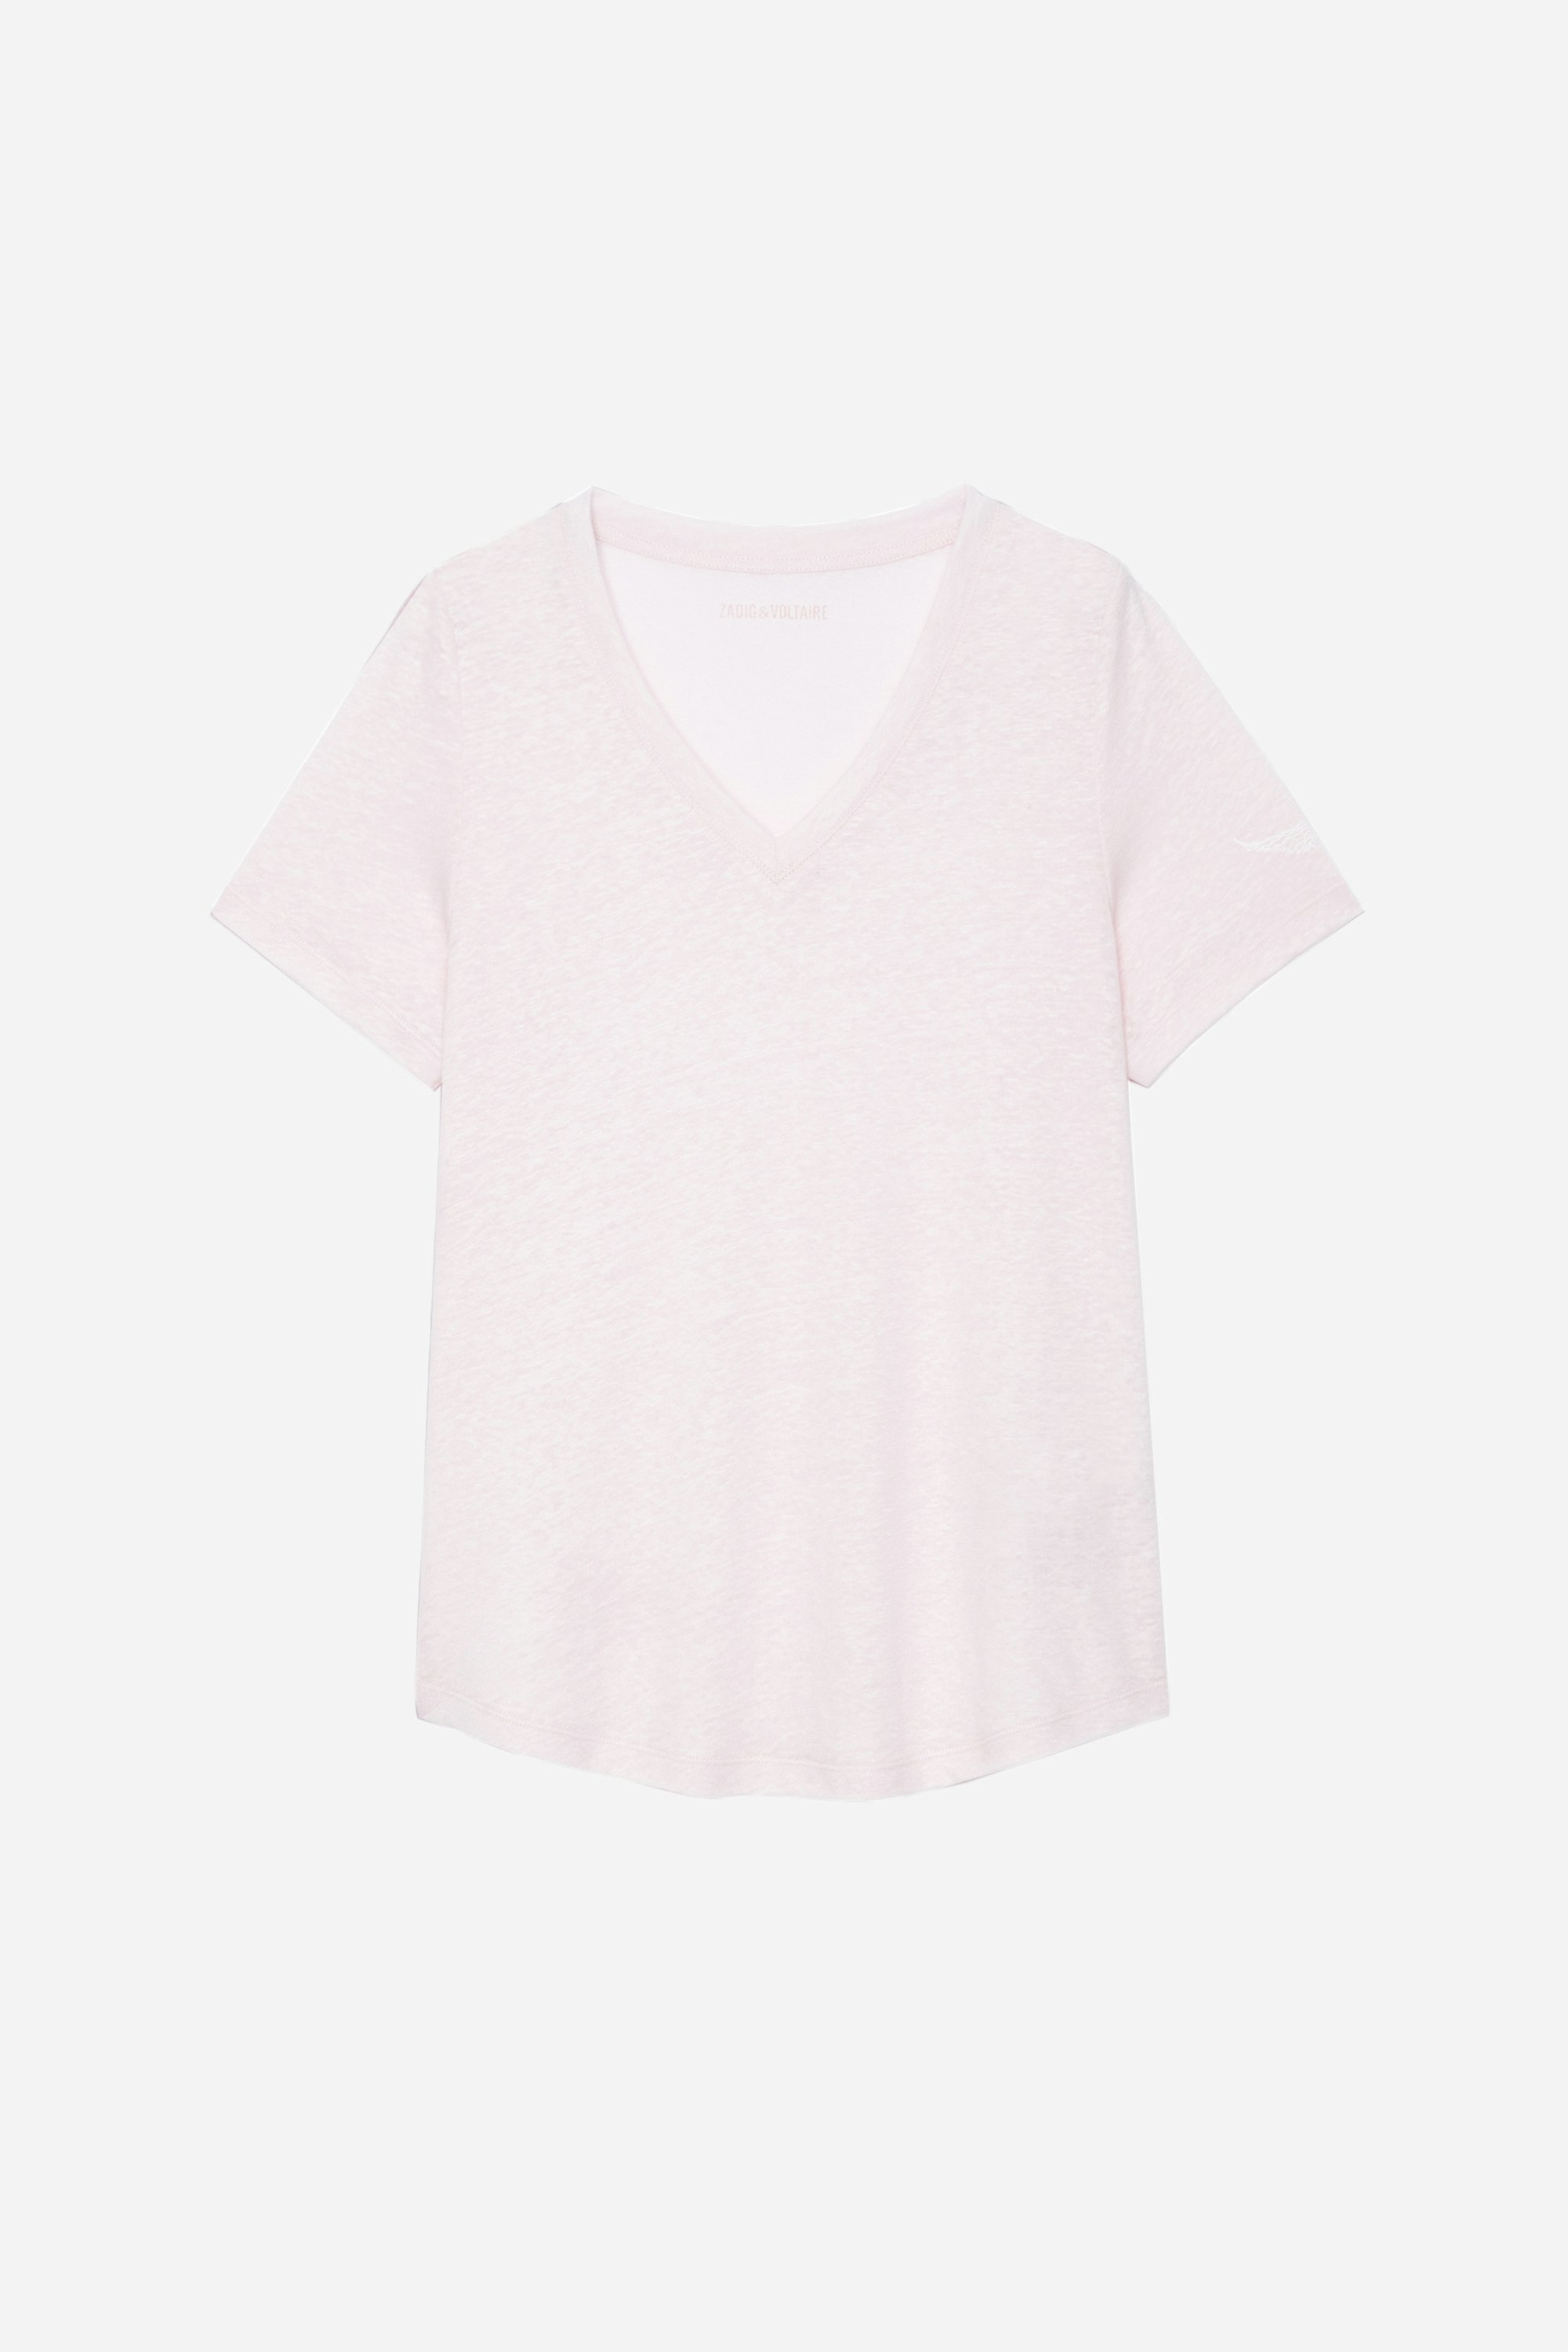 Atia Wings Linen T-shirt Women’s light pink linen T-shirt with wings motif on the left sleeve.